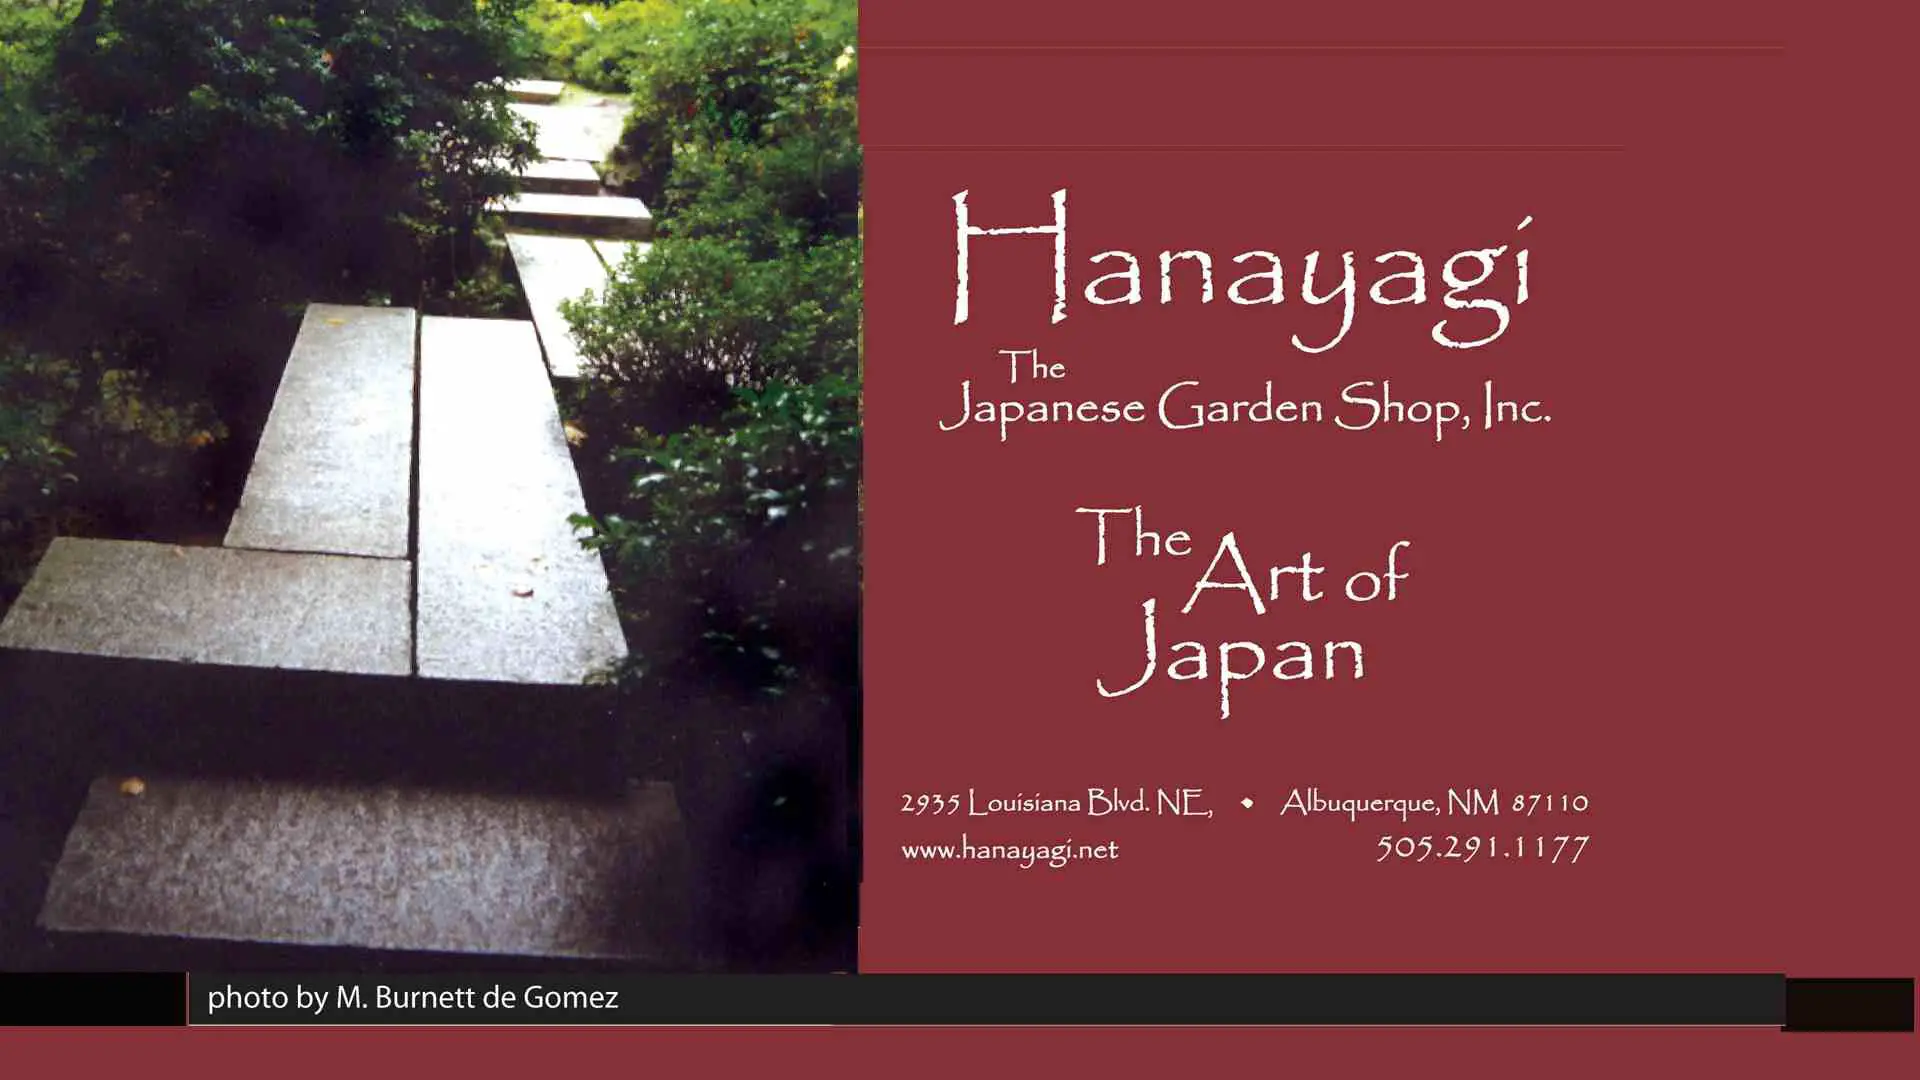 Company logo of Hanayagi the Japanese Garden Shop